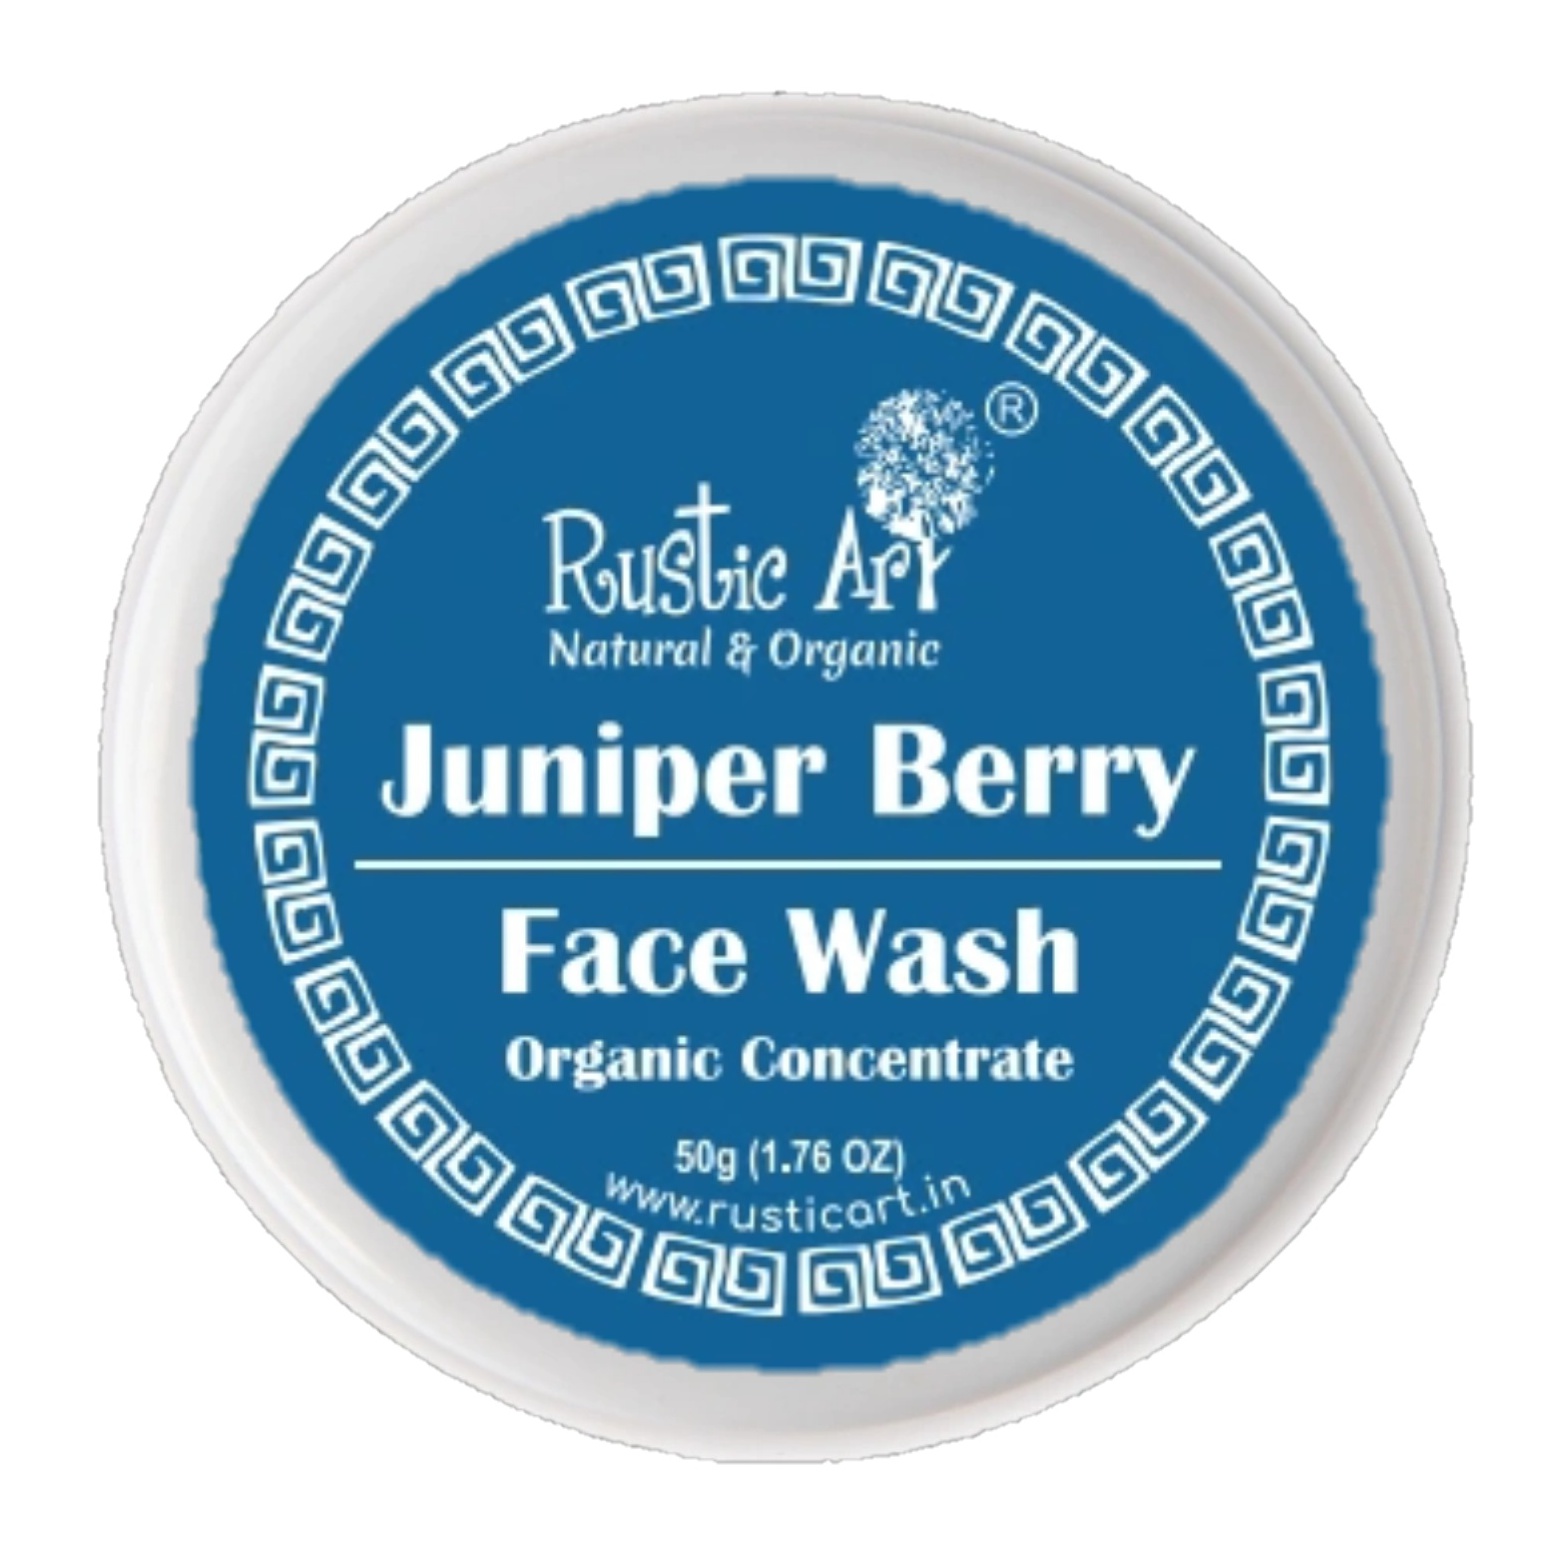 Rustic art Juniper Berry Facewash Concentrate